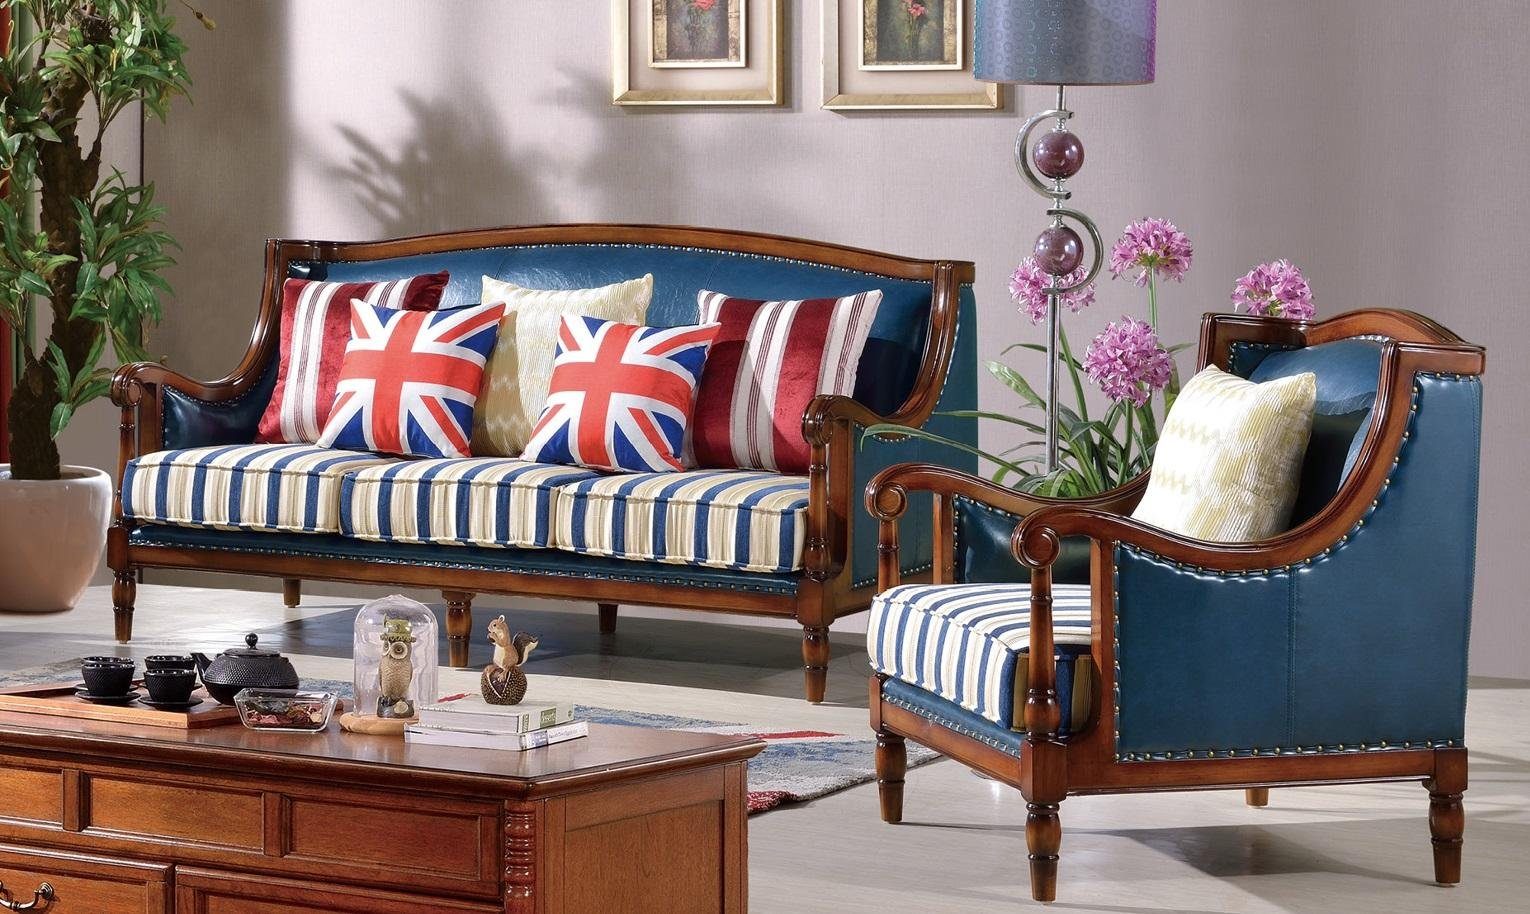 JVmoebel Sofa Amerikanische Möbel Sofagarnitur USA Sofa Couch Set 3+1 Sitzer, Made in Europe